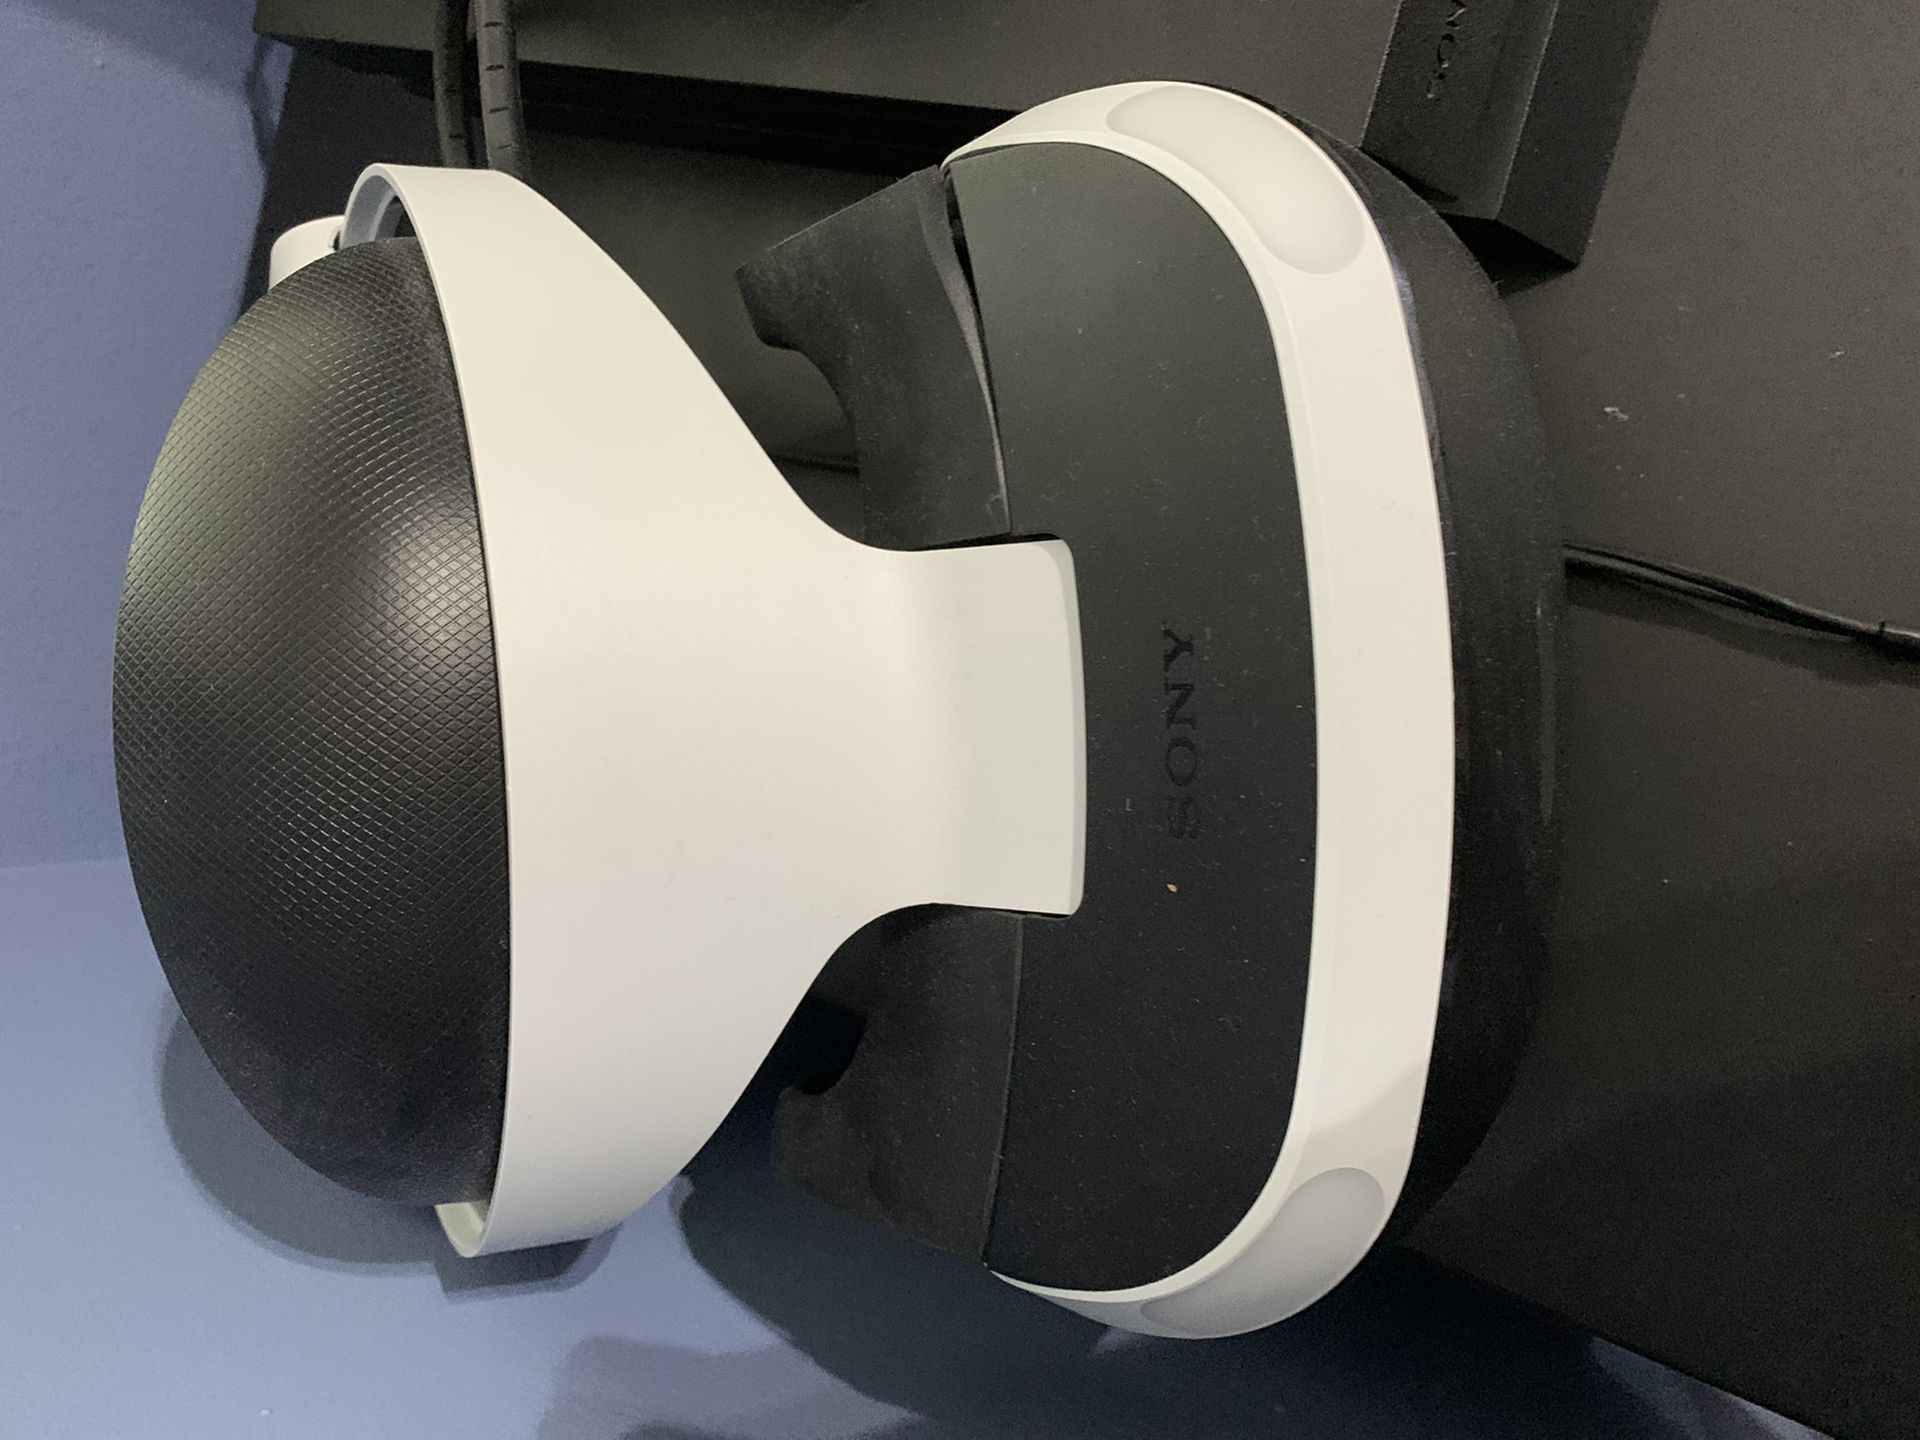 PlayStation 4 VR head set and cámara bundle